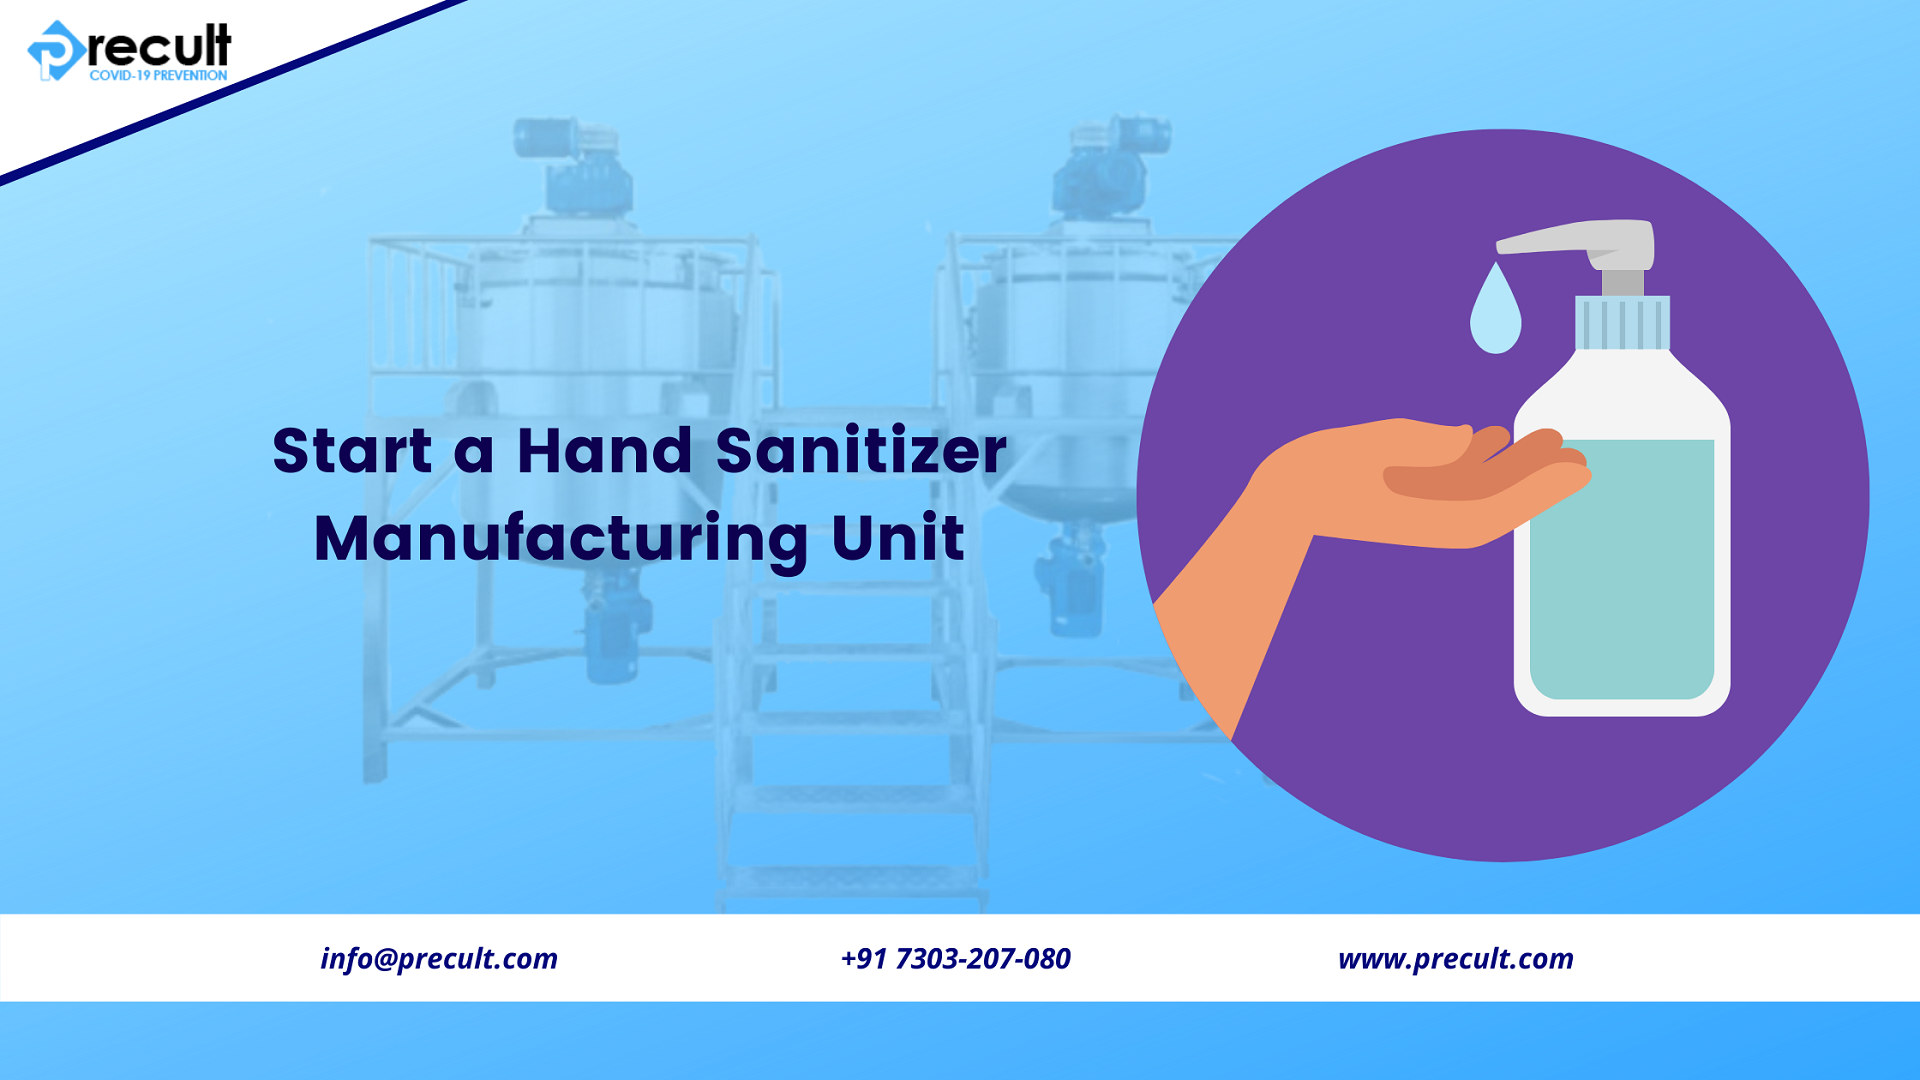 Start a Hand Sanitizer Manufacturing Unit